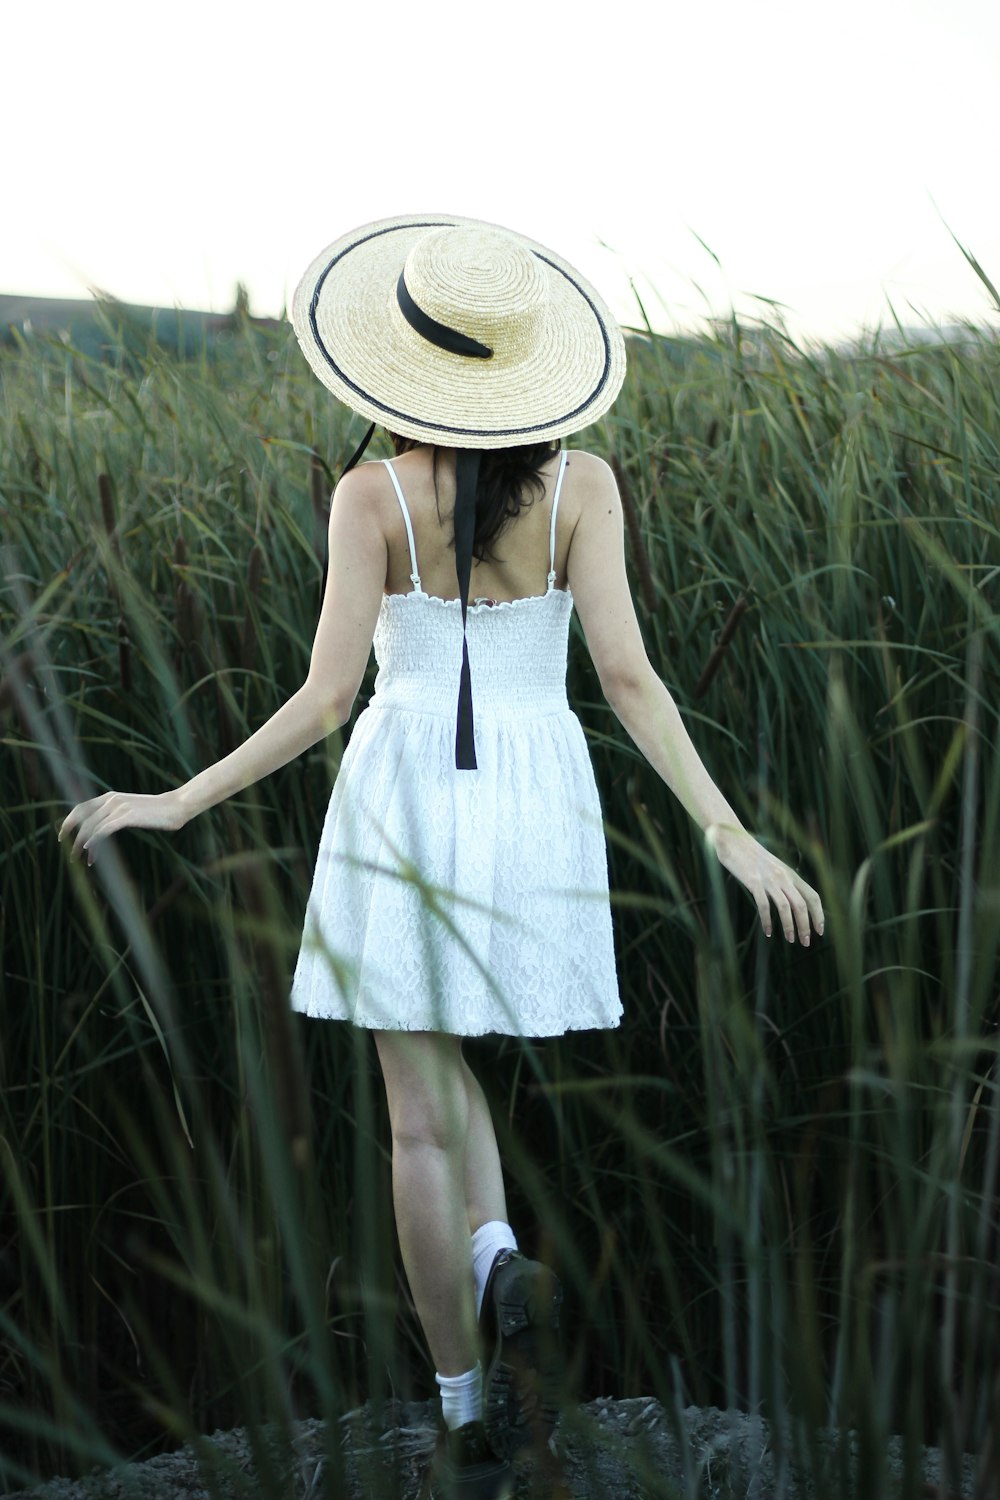 a woman in a hat walks through tall grass